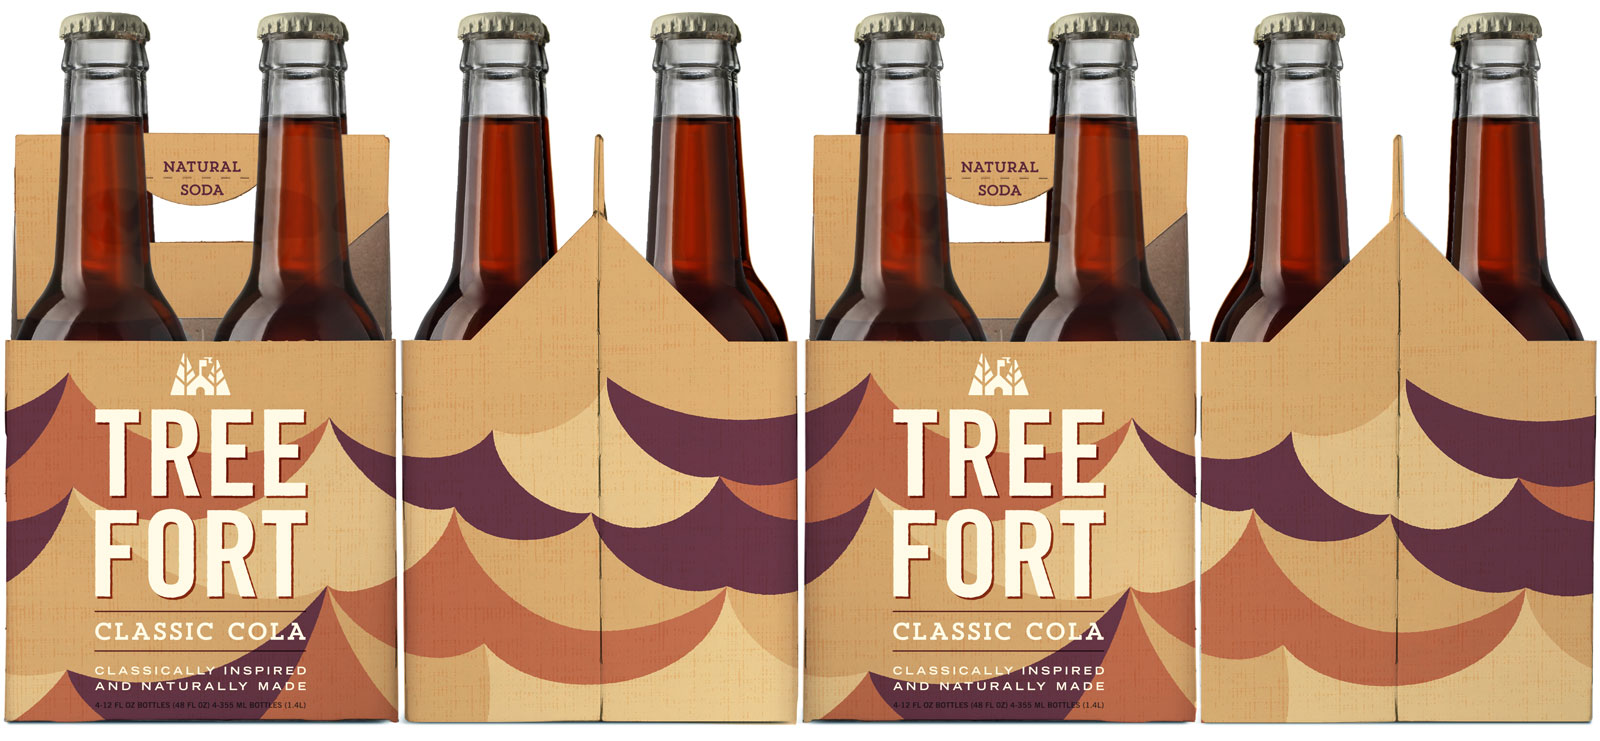 Tree_Fort_4-pack_Line_Up_Cola_2015-11-18